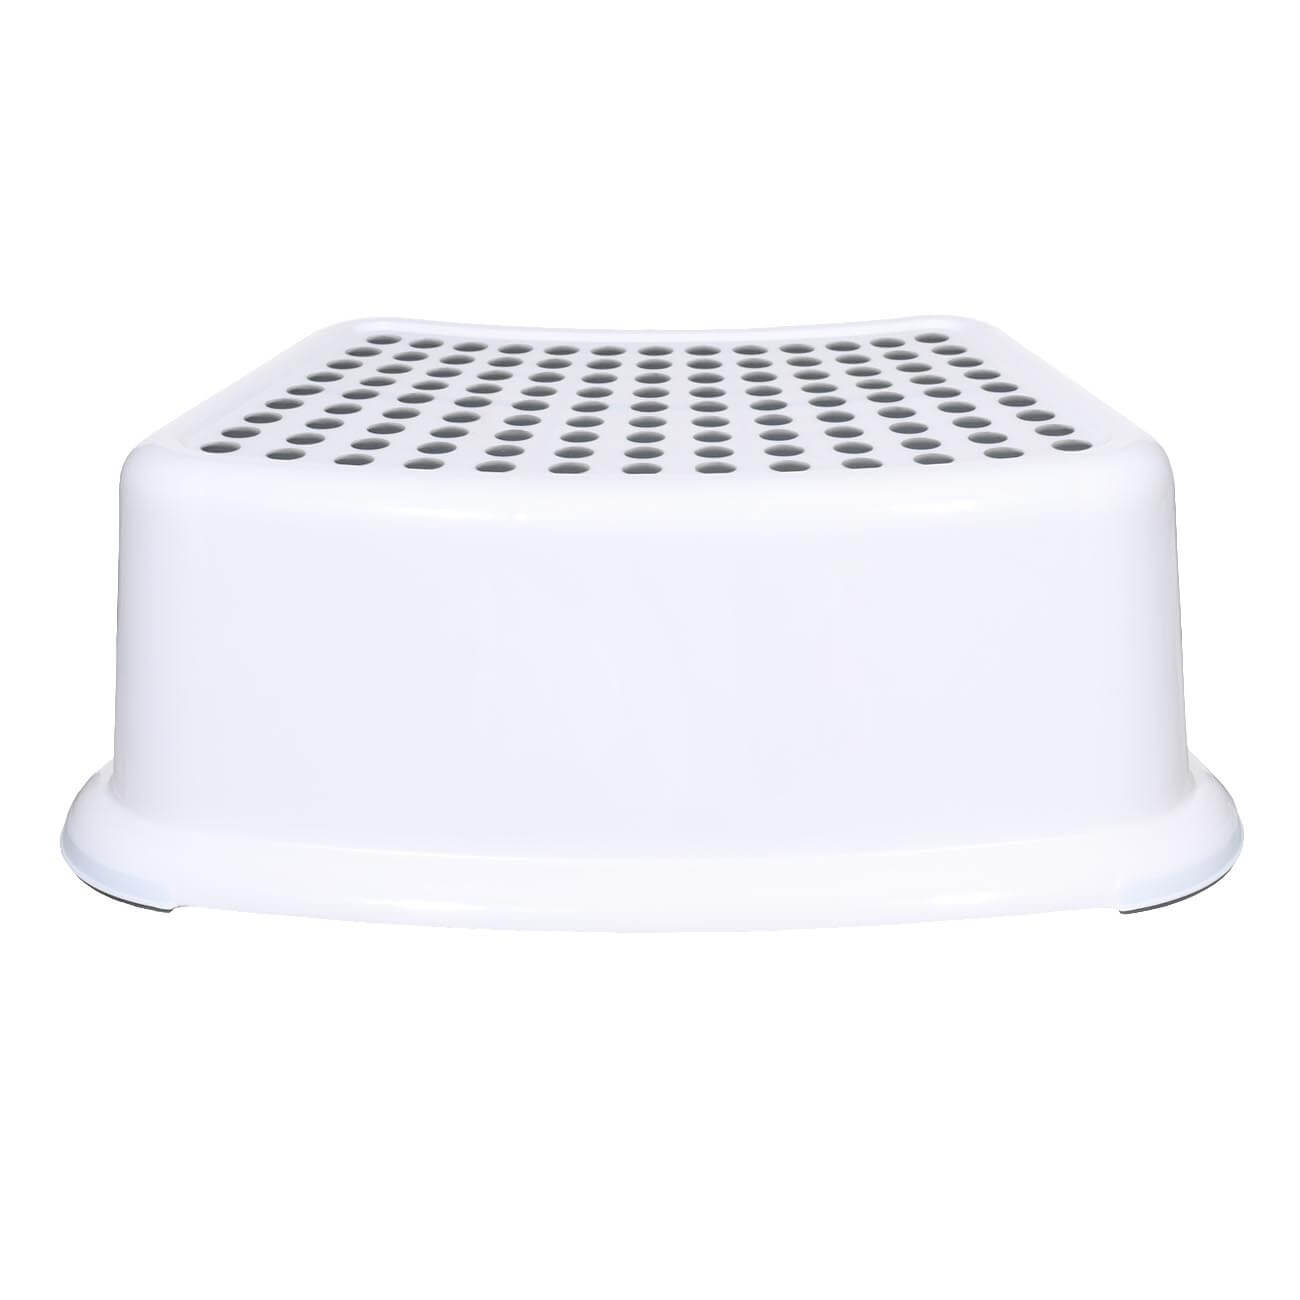 Табурет-подставка, 24х36 см, пластик/резина, бело-серый, Polka dot подставка под тарелки доляна 17×11 см хром